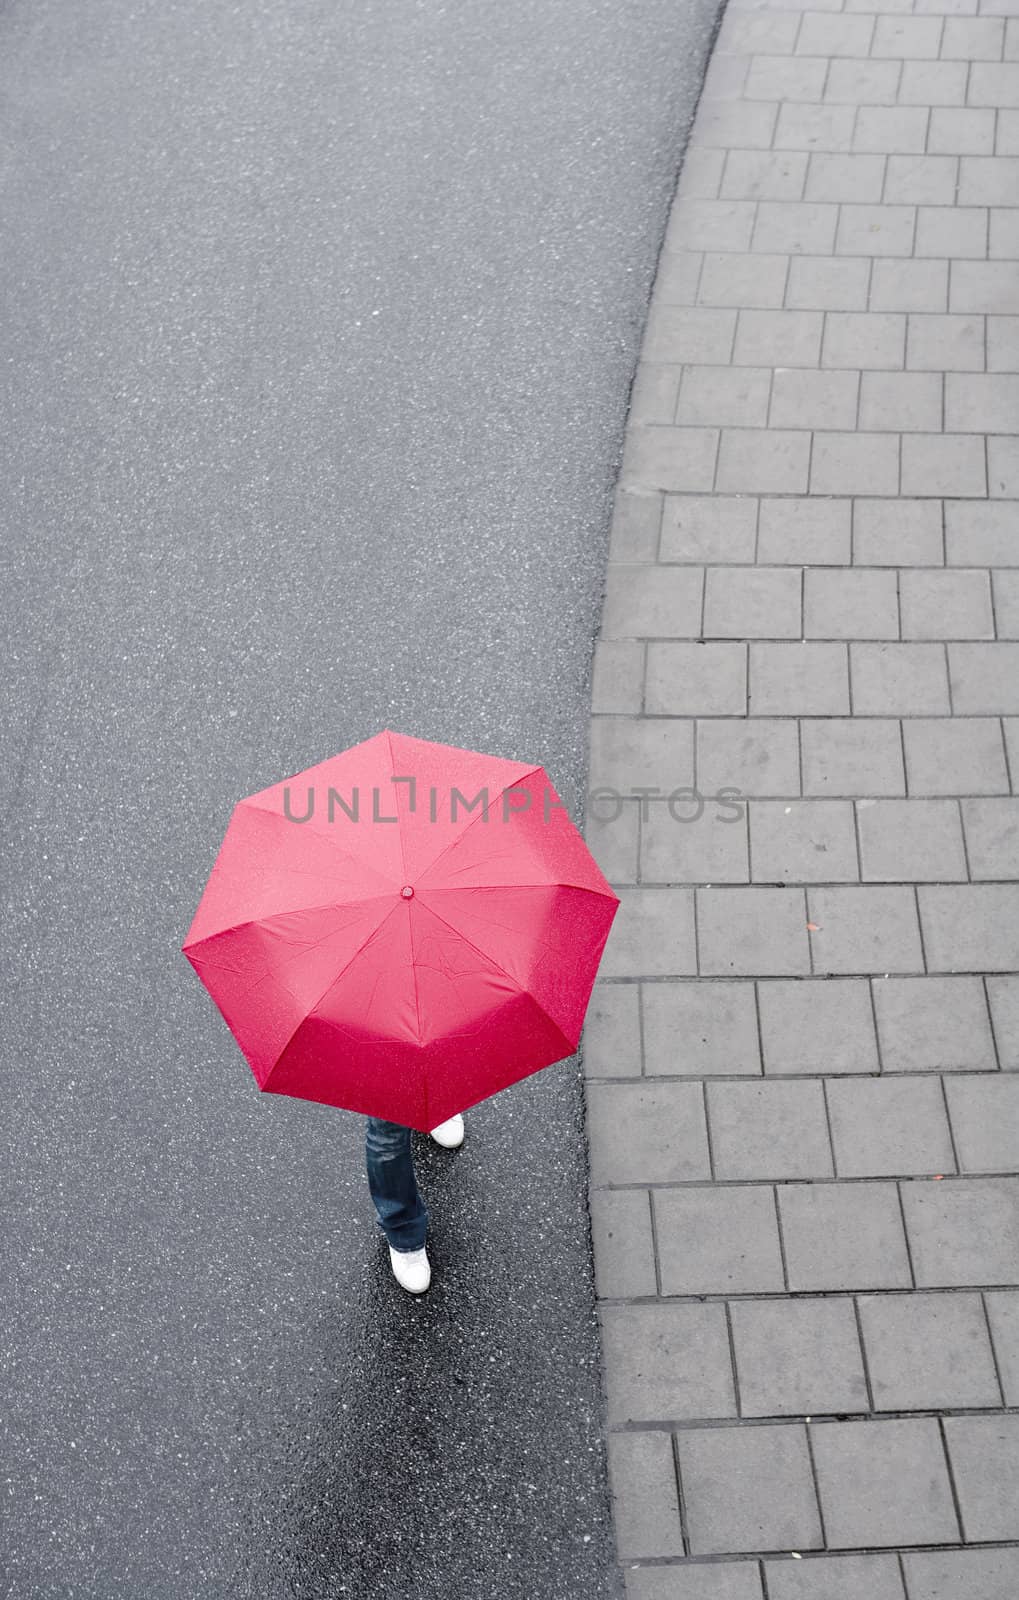 Human with umbrella by gemenacom